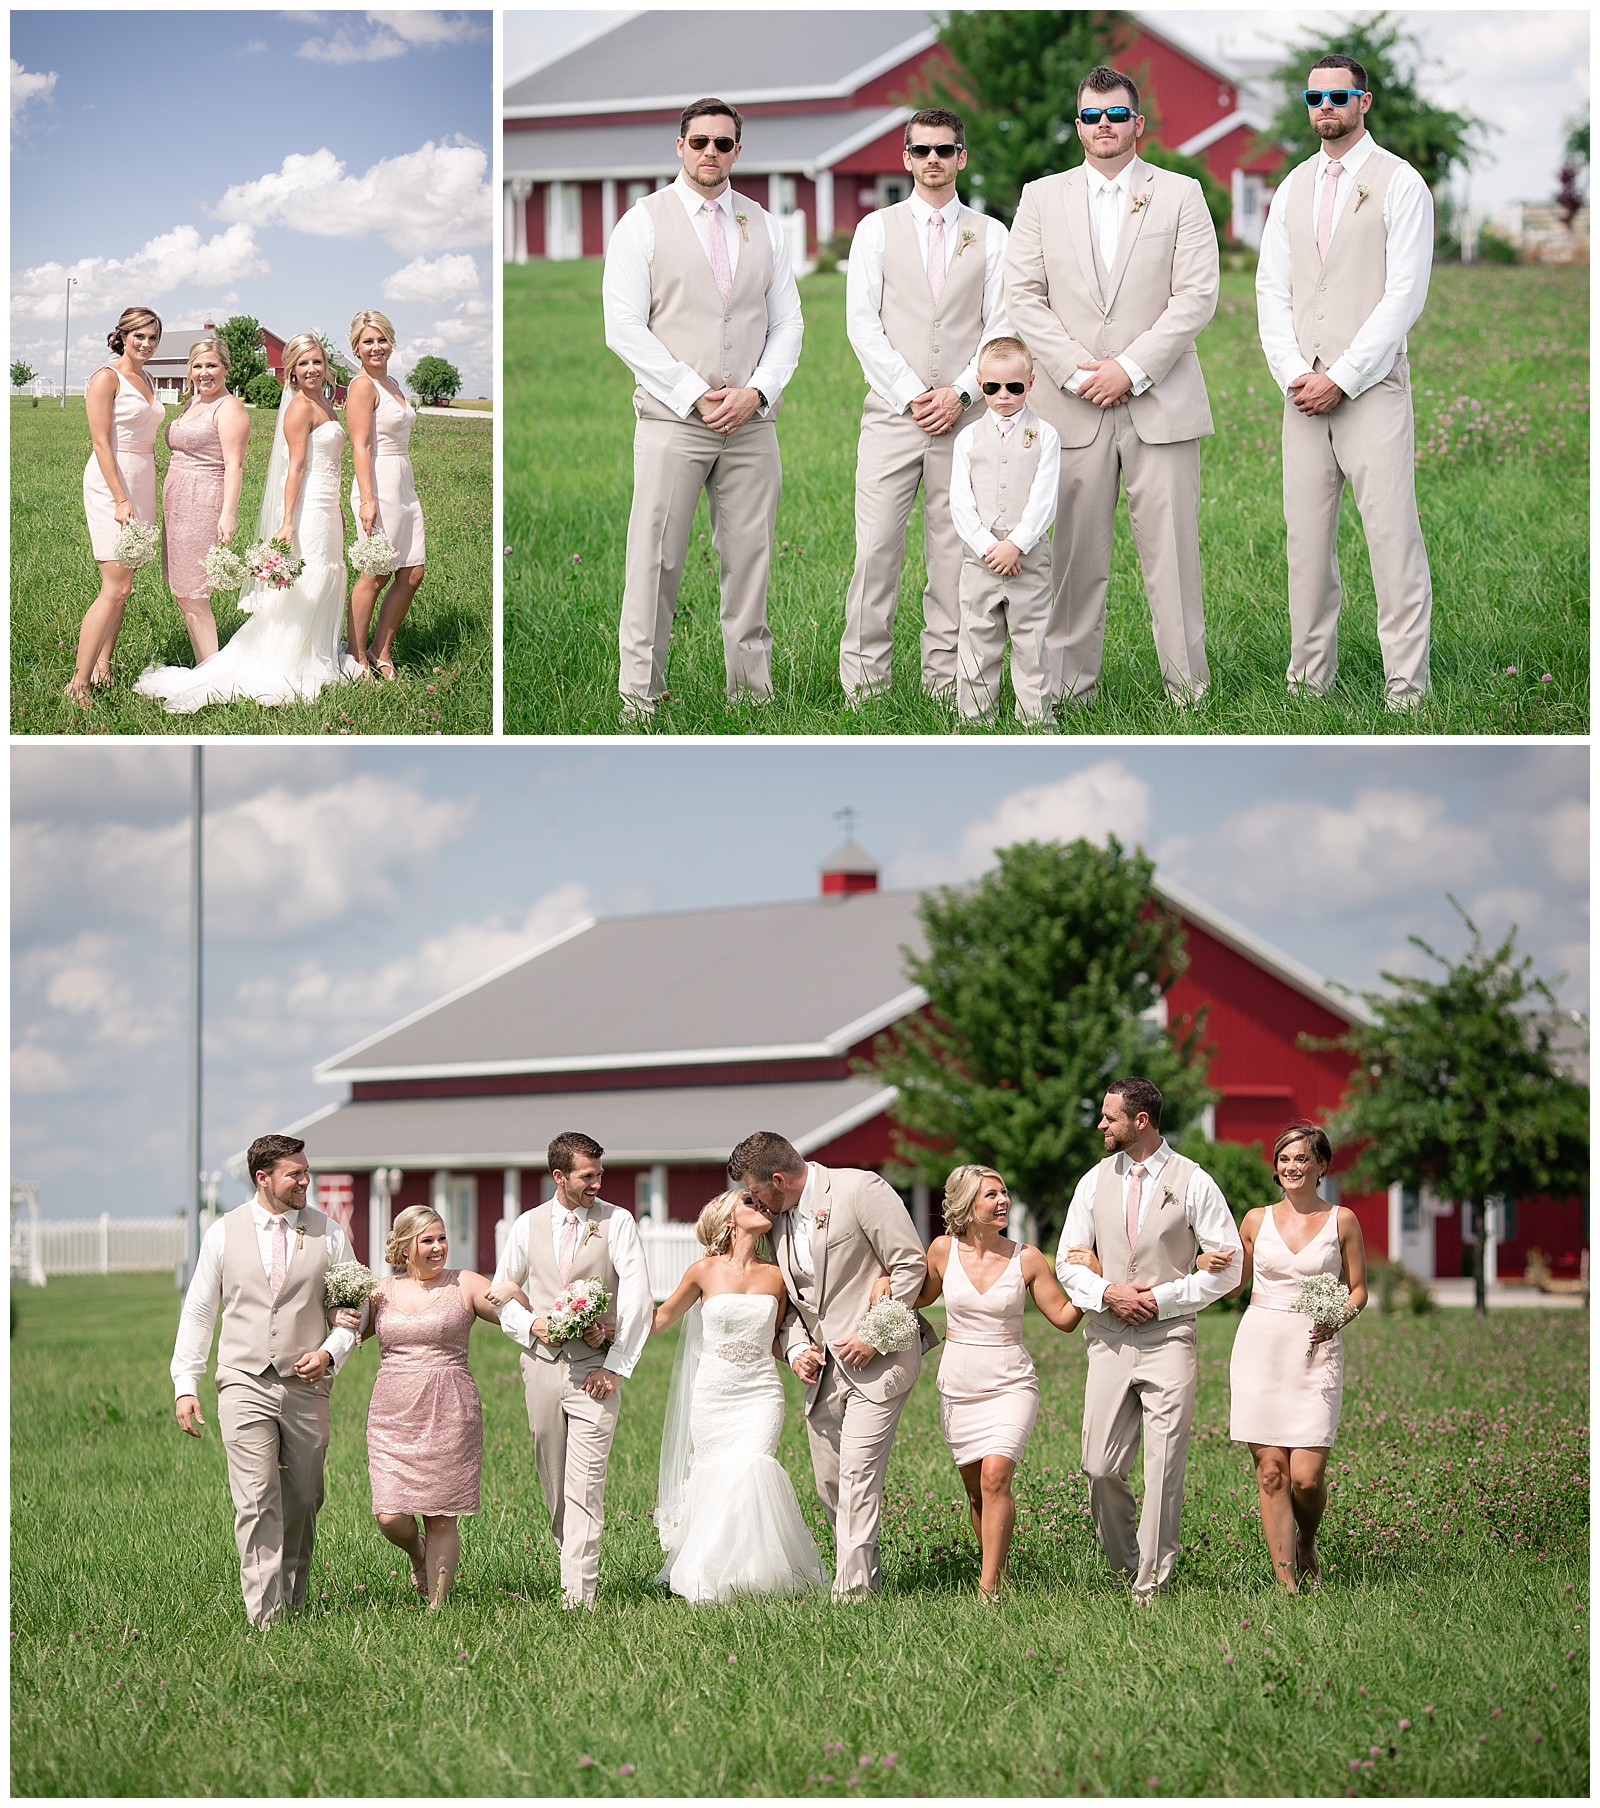 Wedding photography at Mellon's Banquet Hall in Lawson, Missouri.